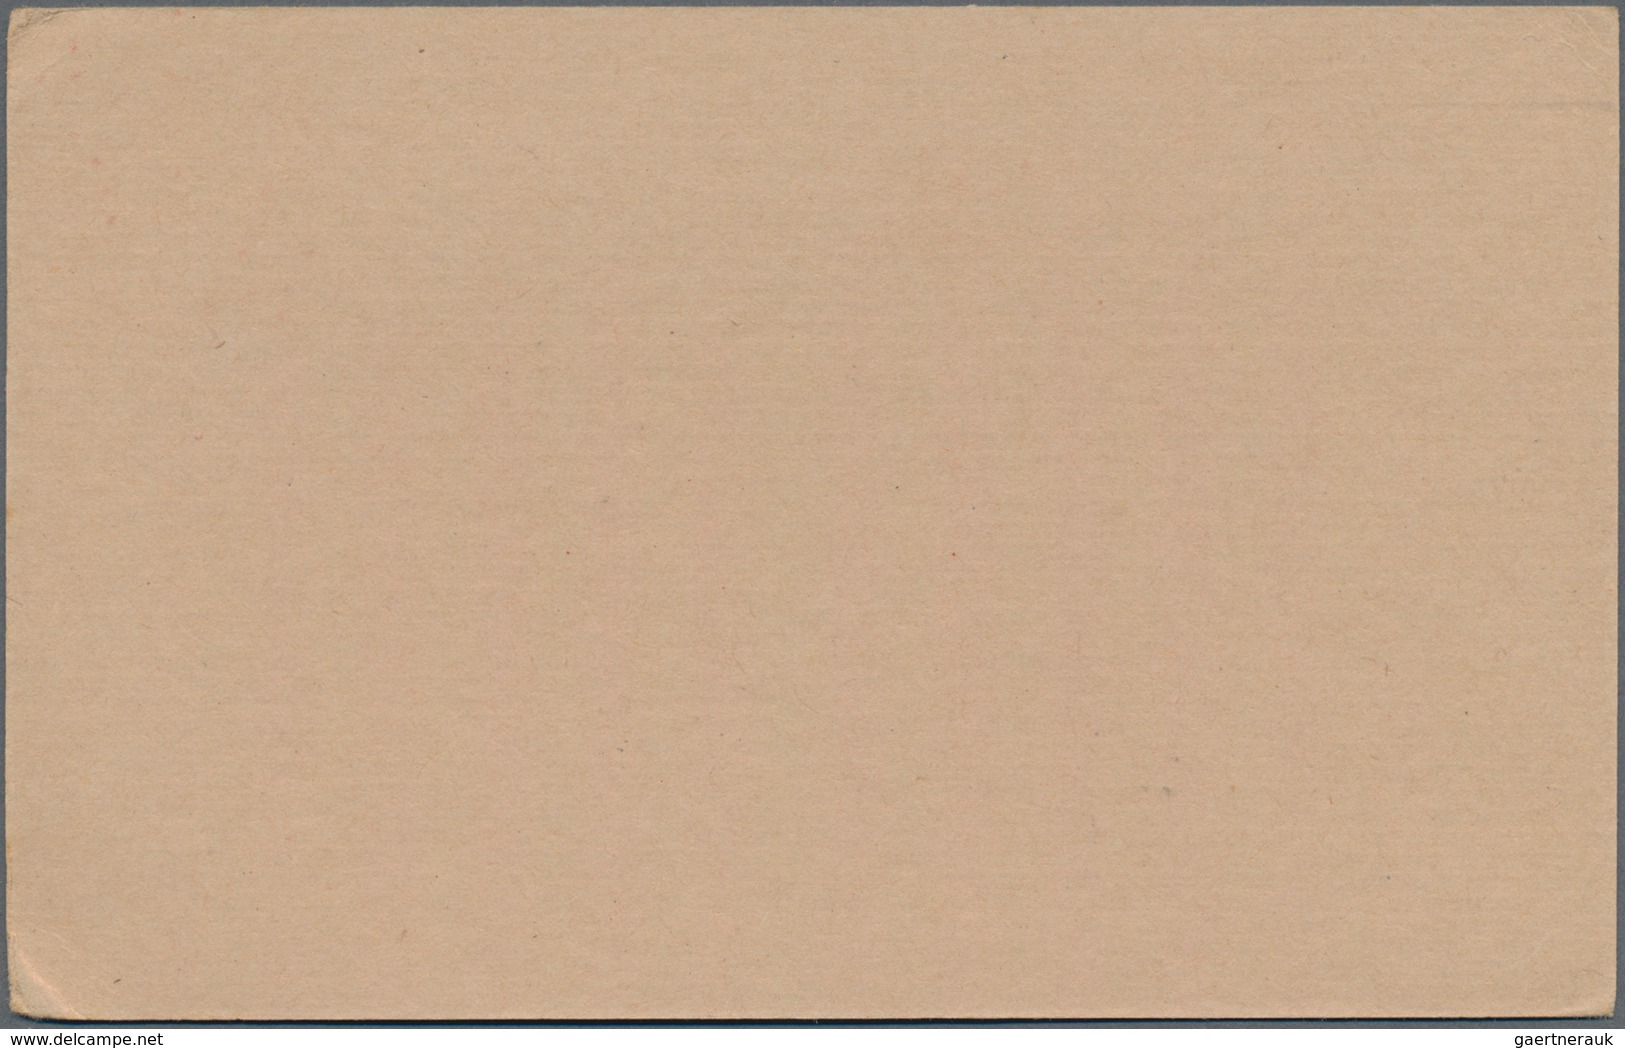 Palästina: 1927, 4 M, 7 M, 8 M postal stationery card + 5 M letter card all with overprint "SPECIMEN